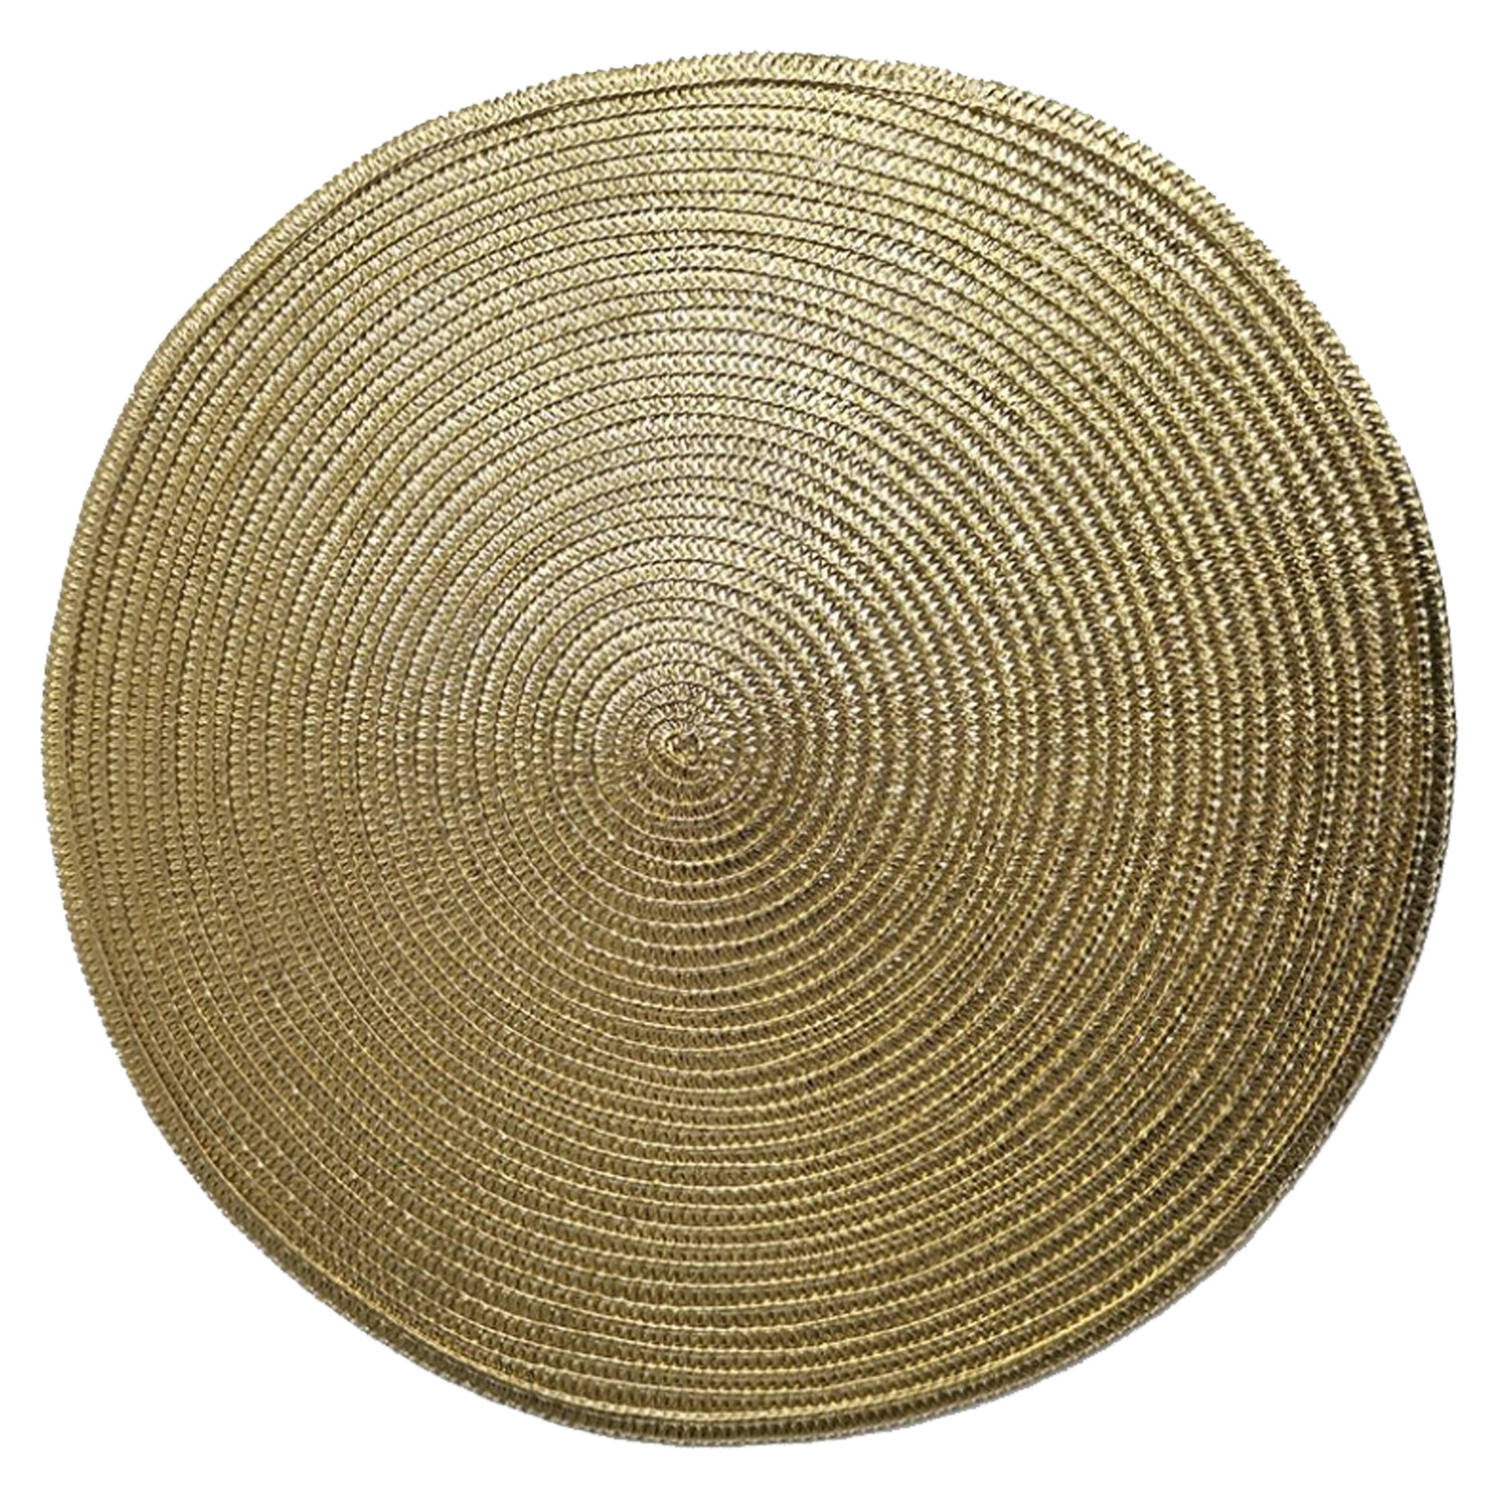 Ronde Placemats metallic goud look diameter 38 cm - Geverfd jute - Voor o.a. Kerstmis